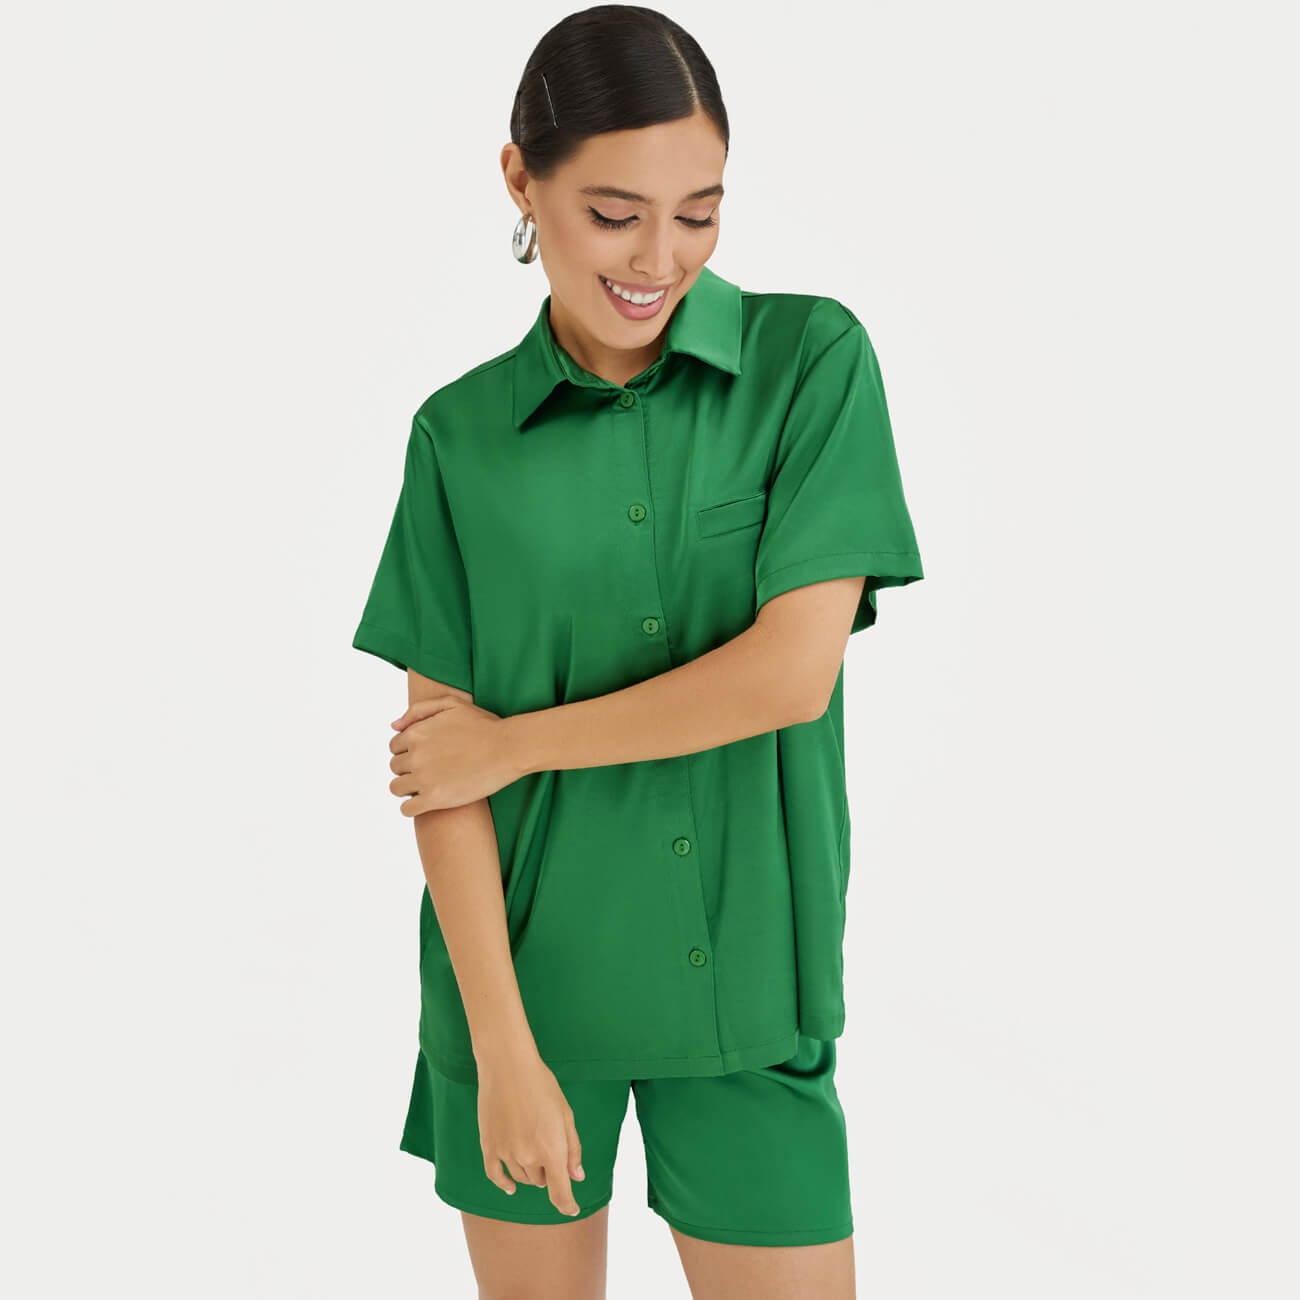 Рубашка женская, р. XL, с коротким рукавом, полиэстер/эластан, зеленая, Madeline sfvest 4006 светоотражающая футболка рабочая одежда одежда рабочая одежда с коротким рукавом светоотражающая защитная рубашка дышащий